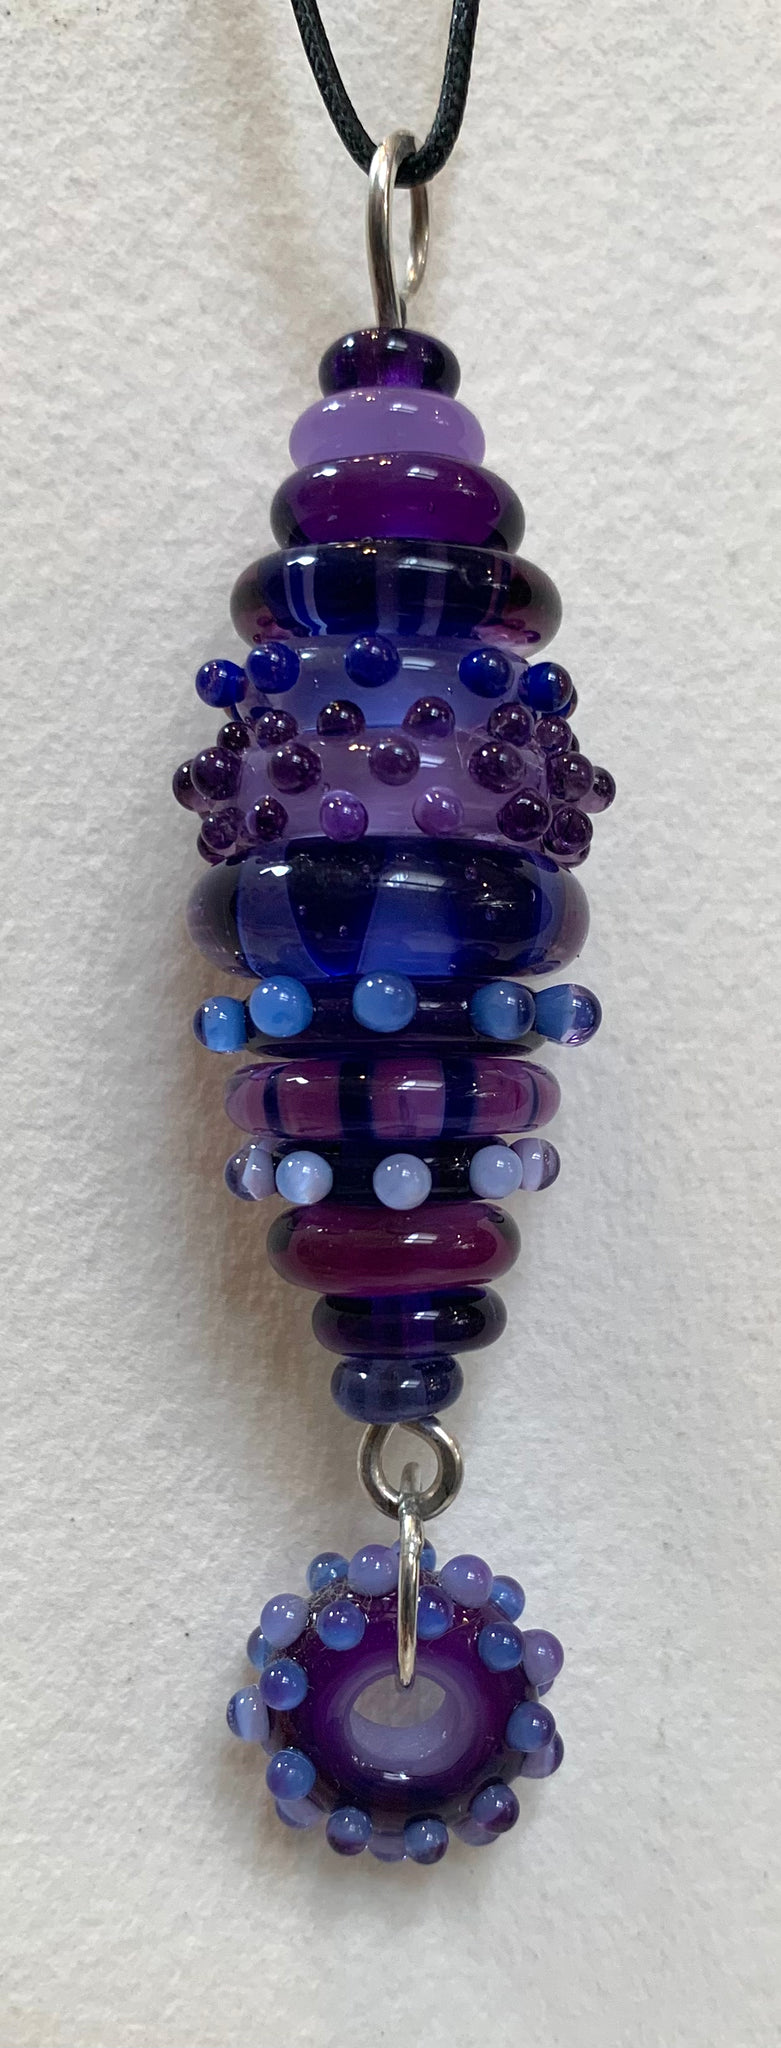 Stacked bead pendant purples